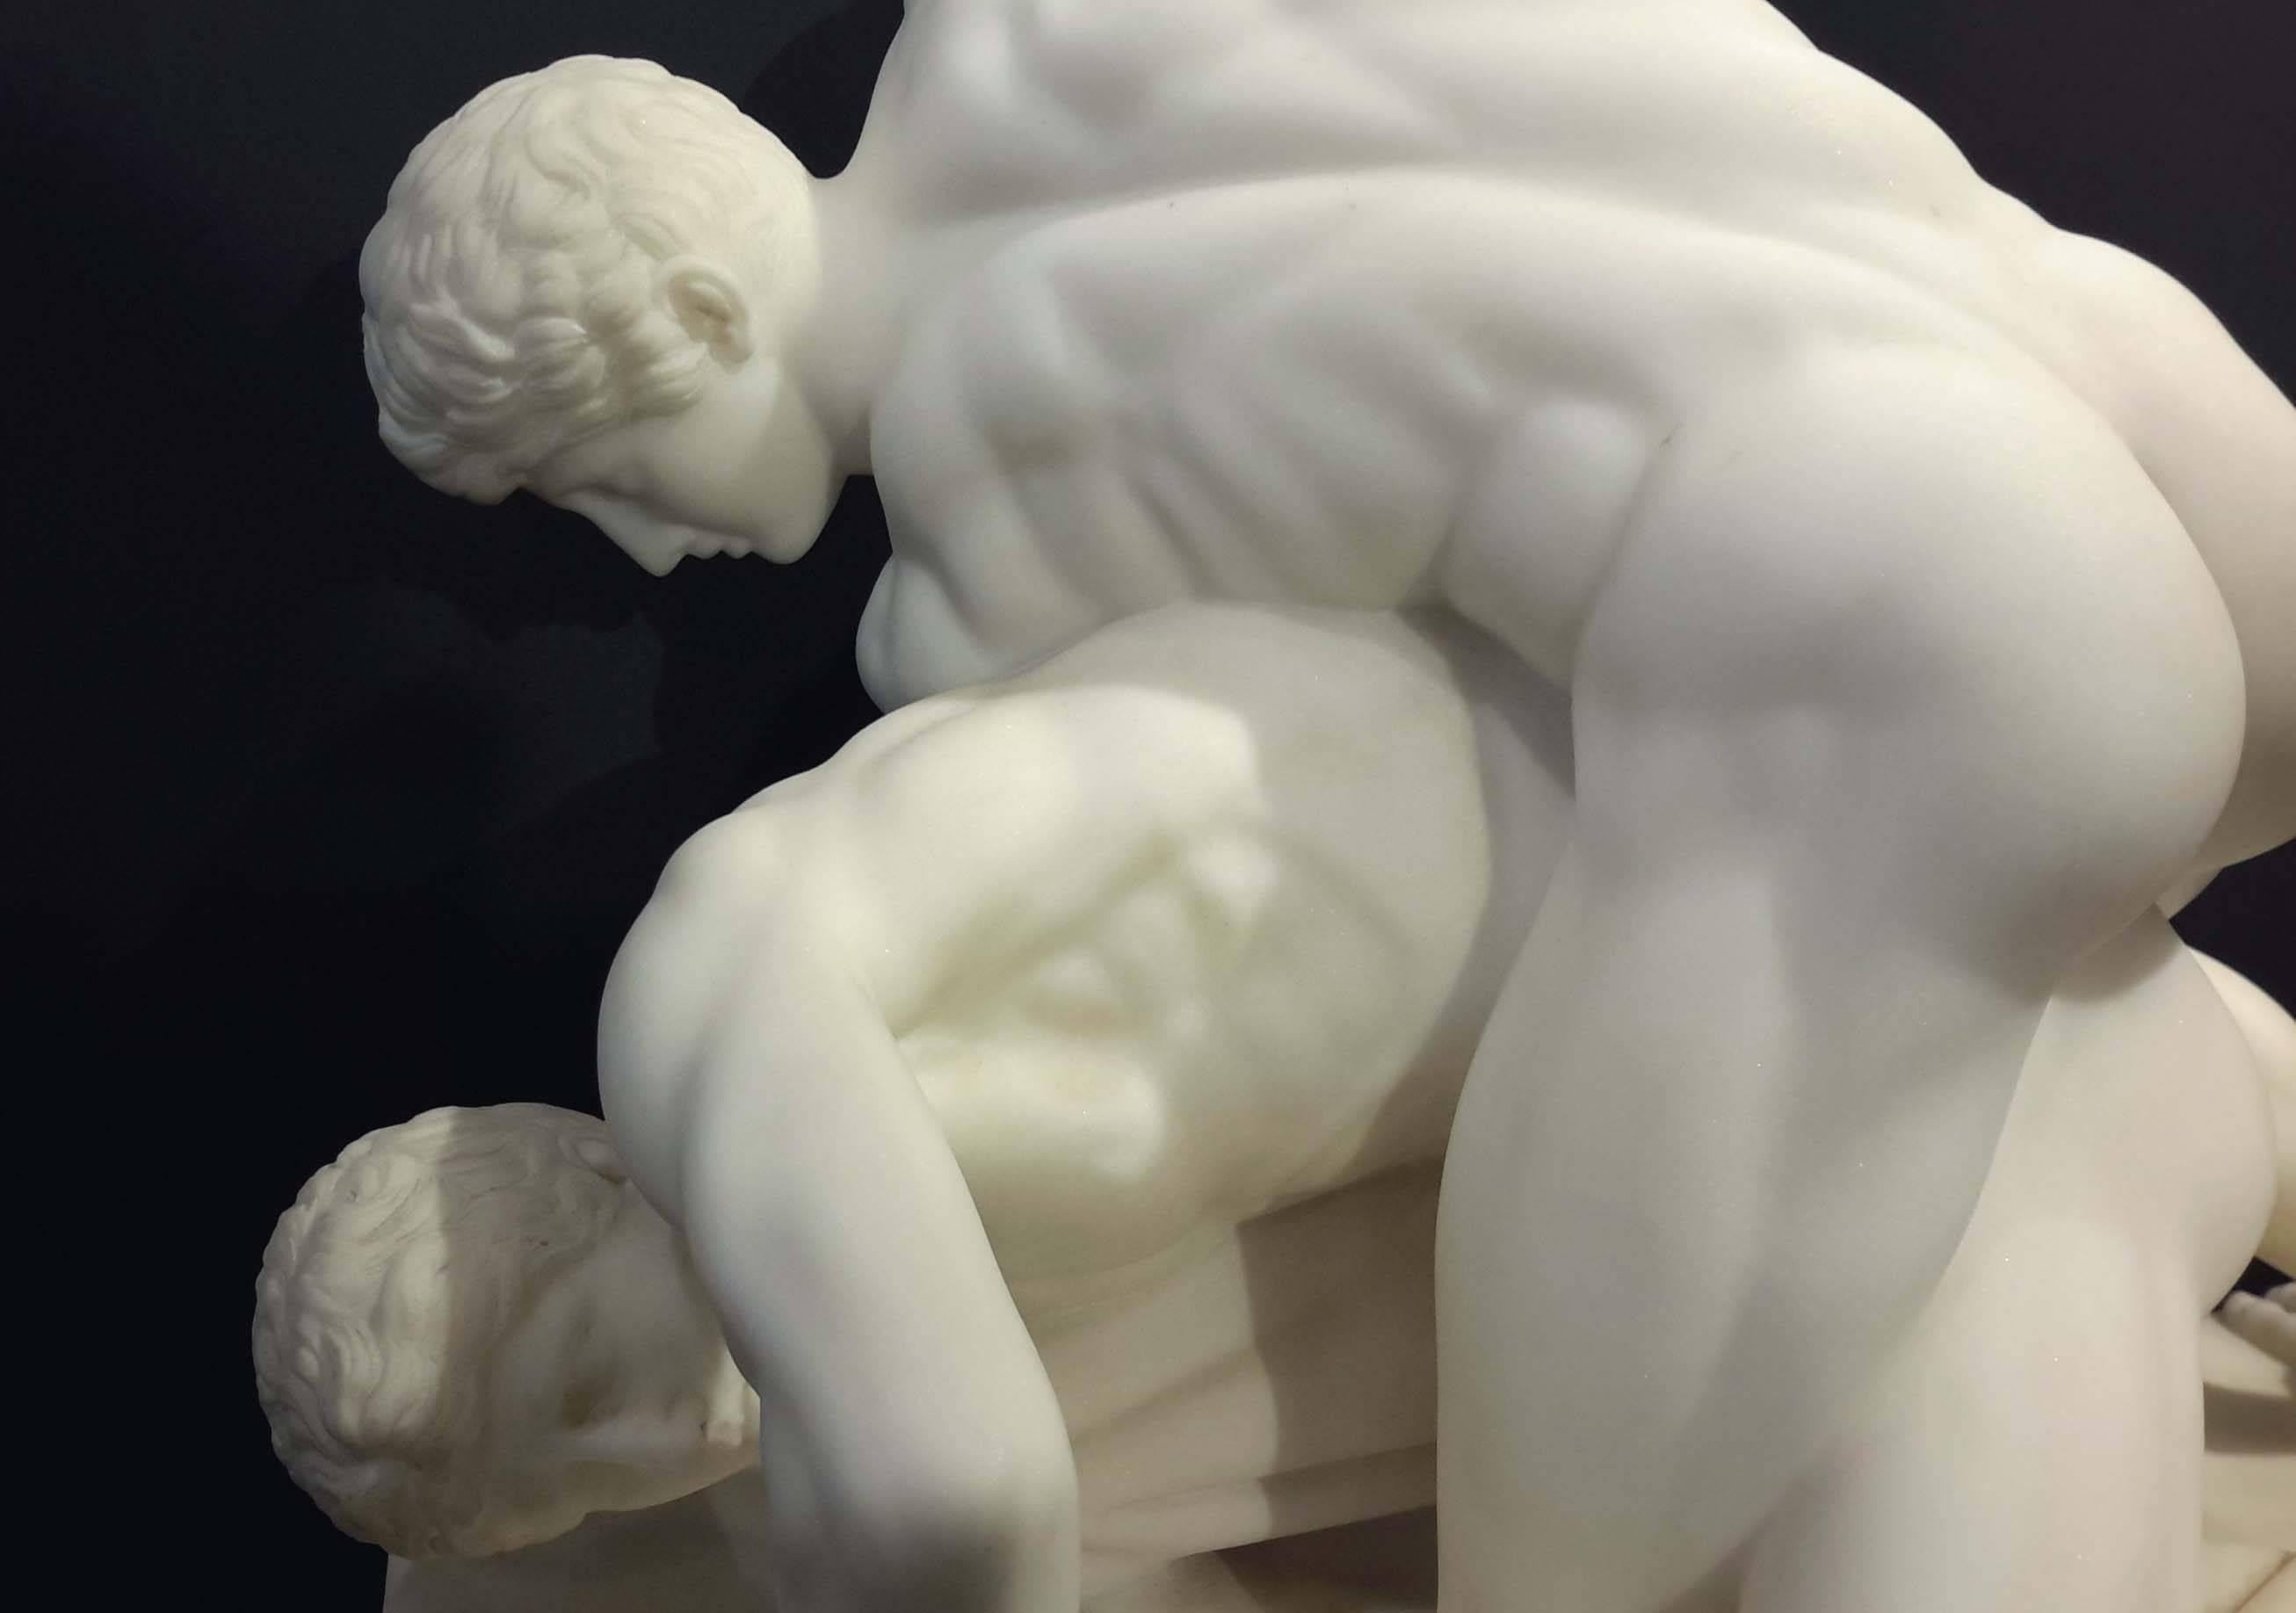 Italian Carrera Marble Sculpture of Two Roman Wrestlers, 19th Century Grand Tour